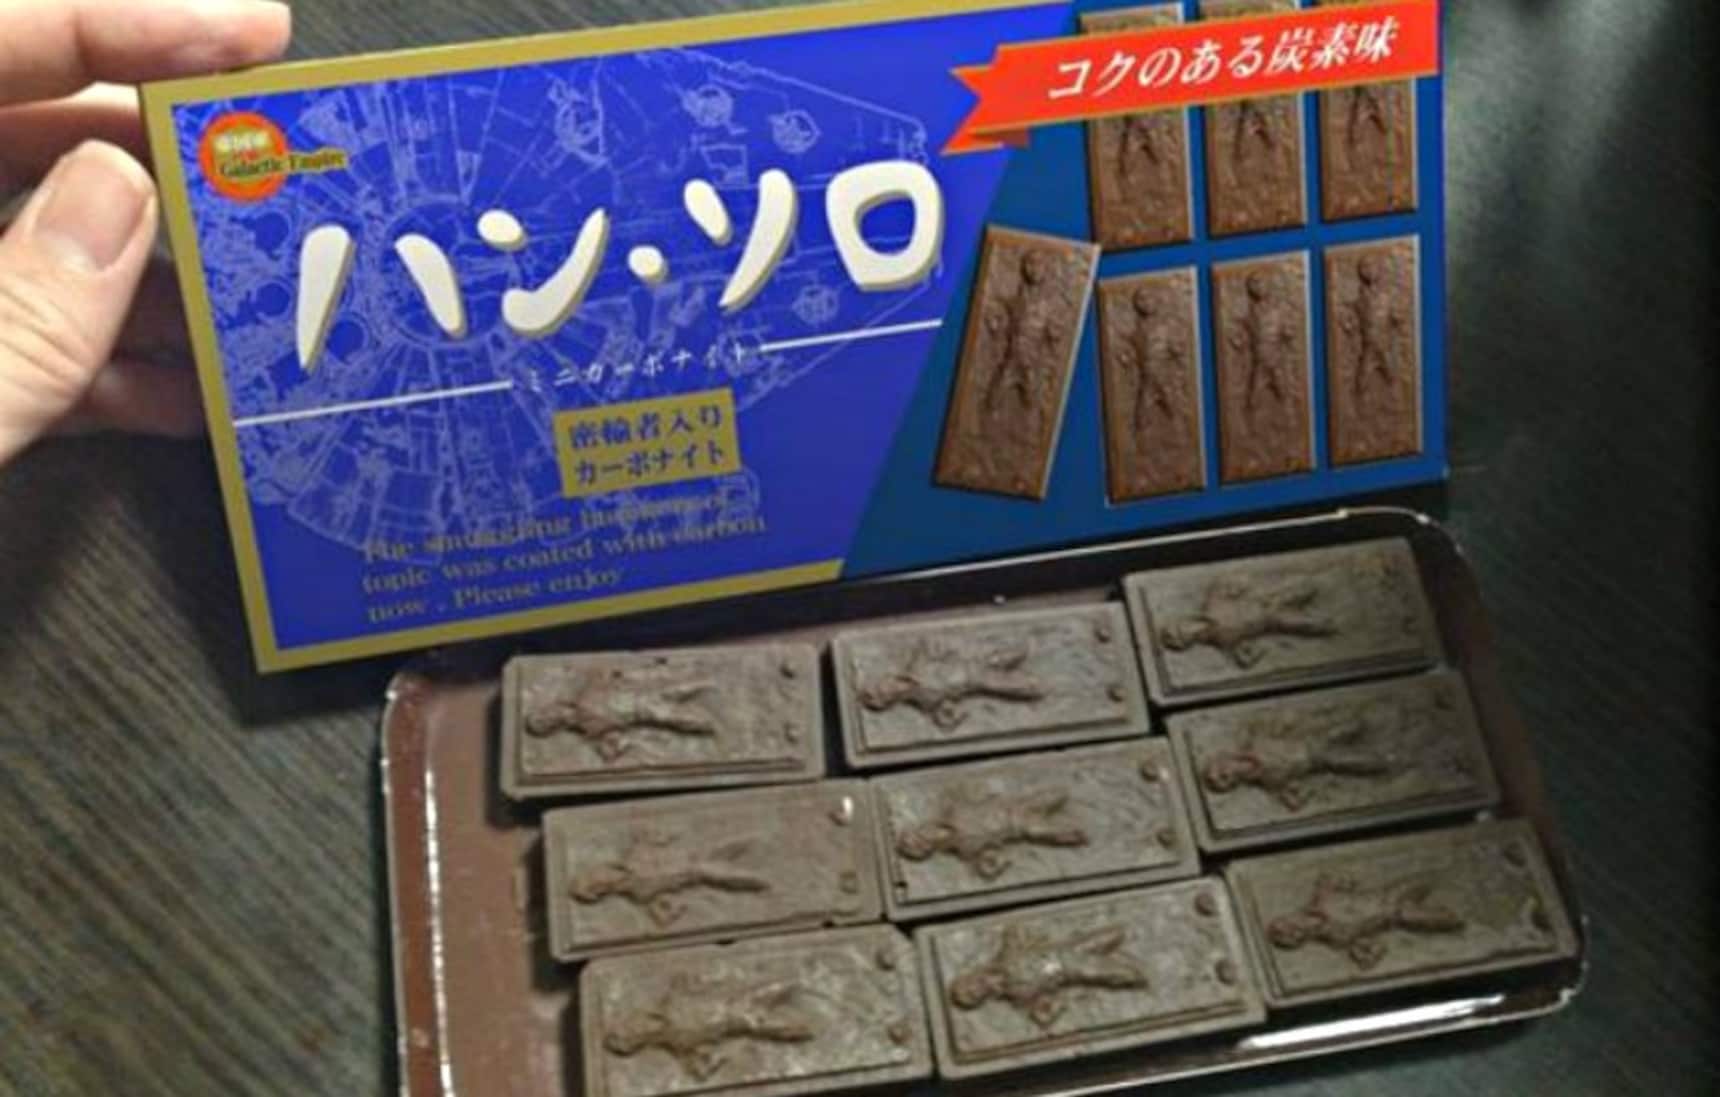 Han Solo Chocolates & Other Homemade Treats